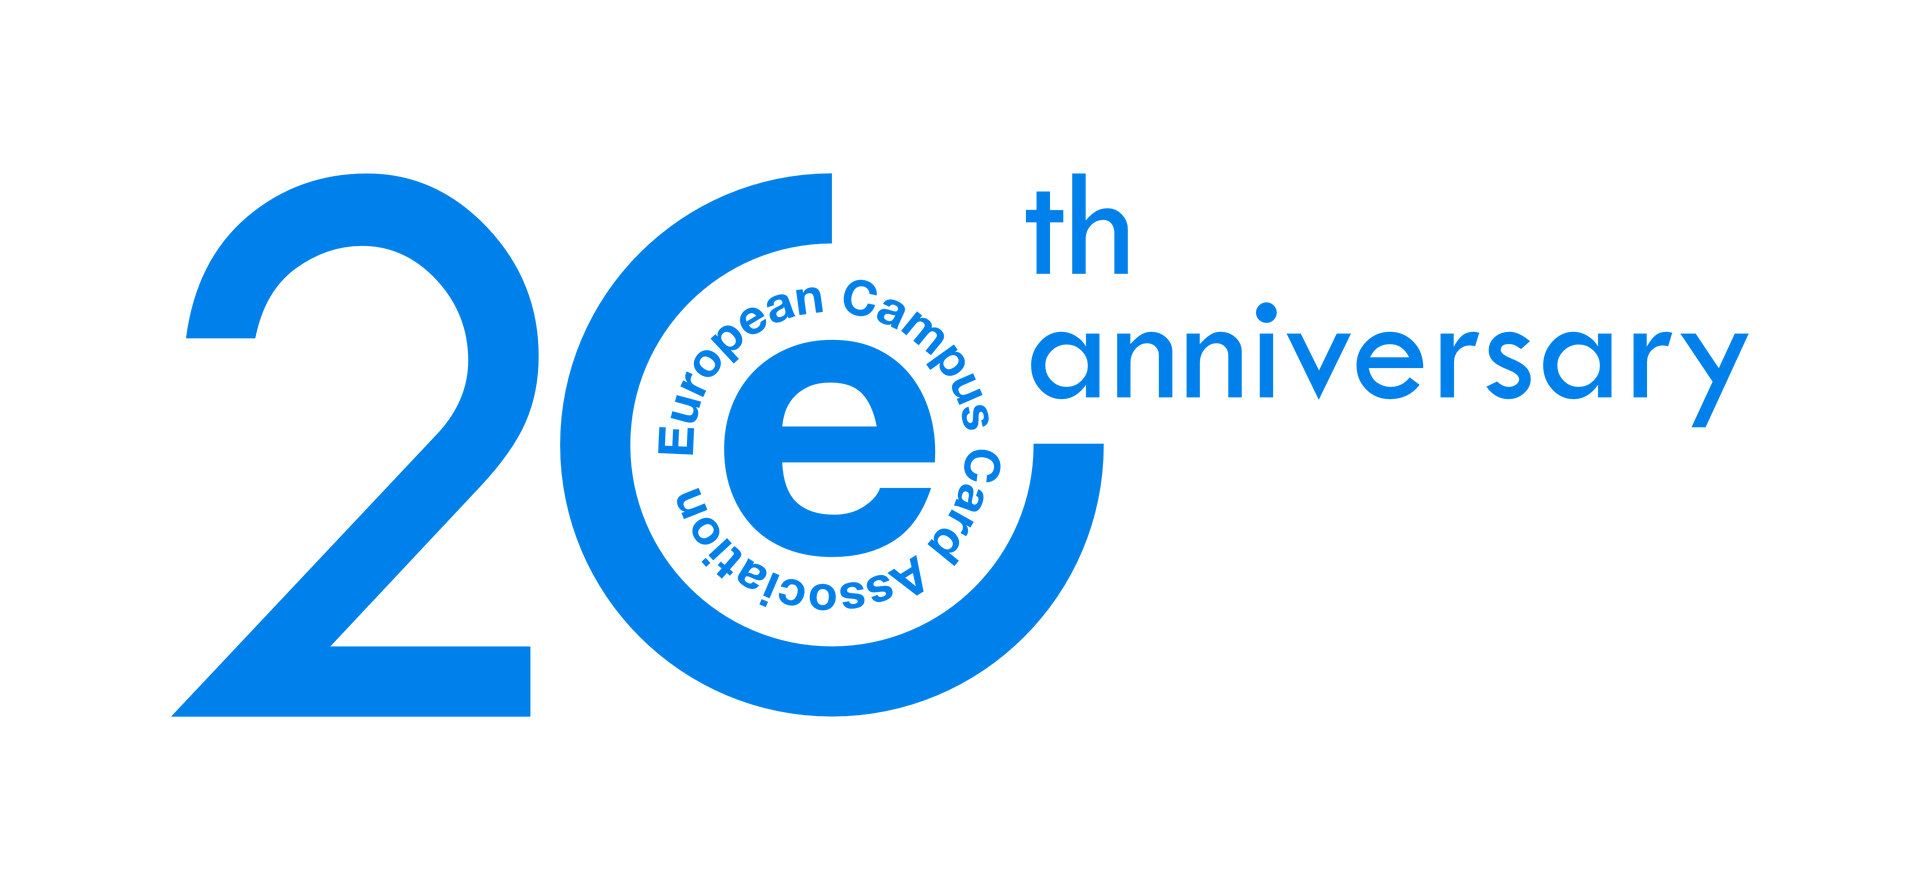 ecca_logo_20th_anniversary_png_300_dpi.png